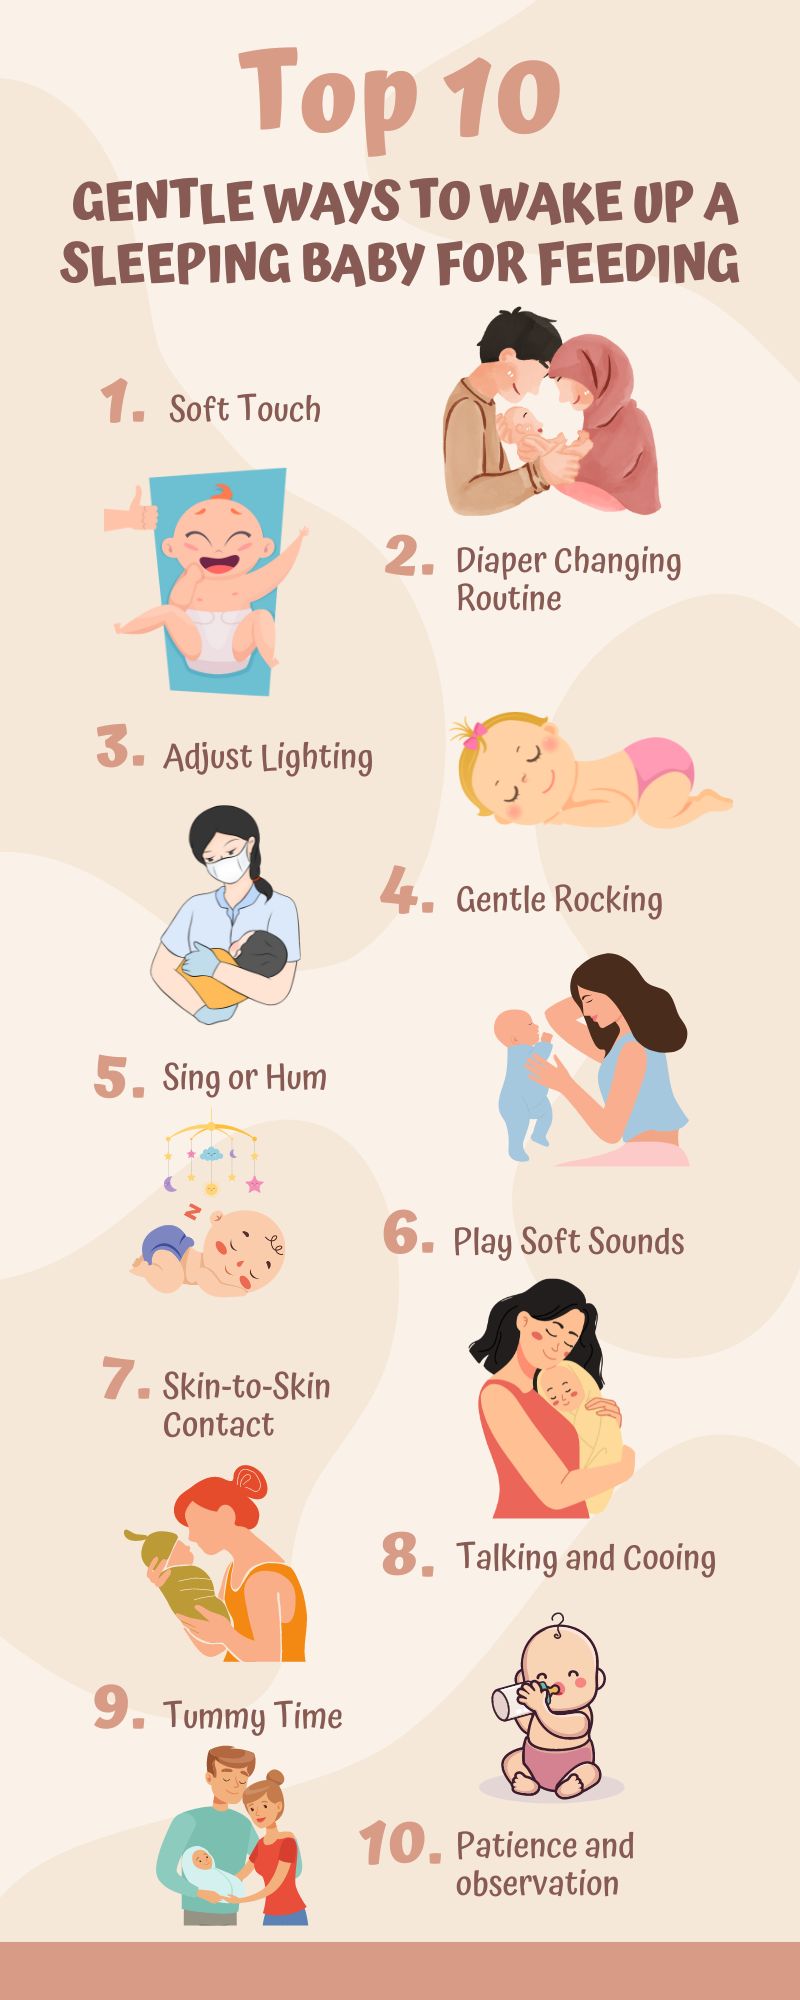 10 ways to wake up a sleeping baby for feeding